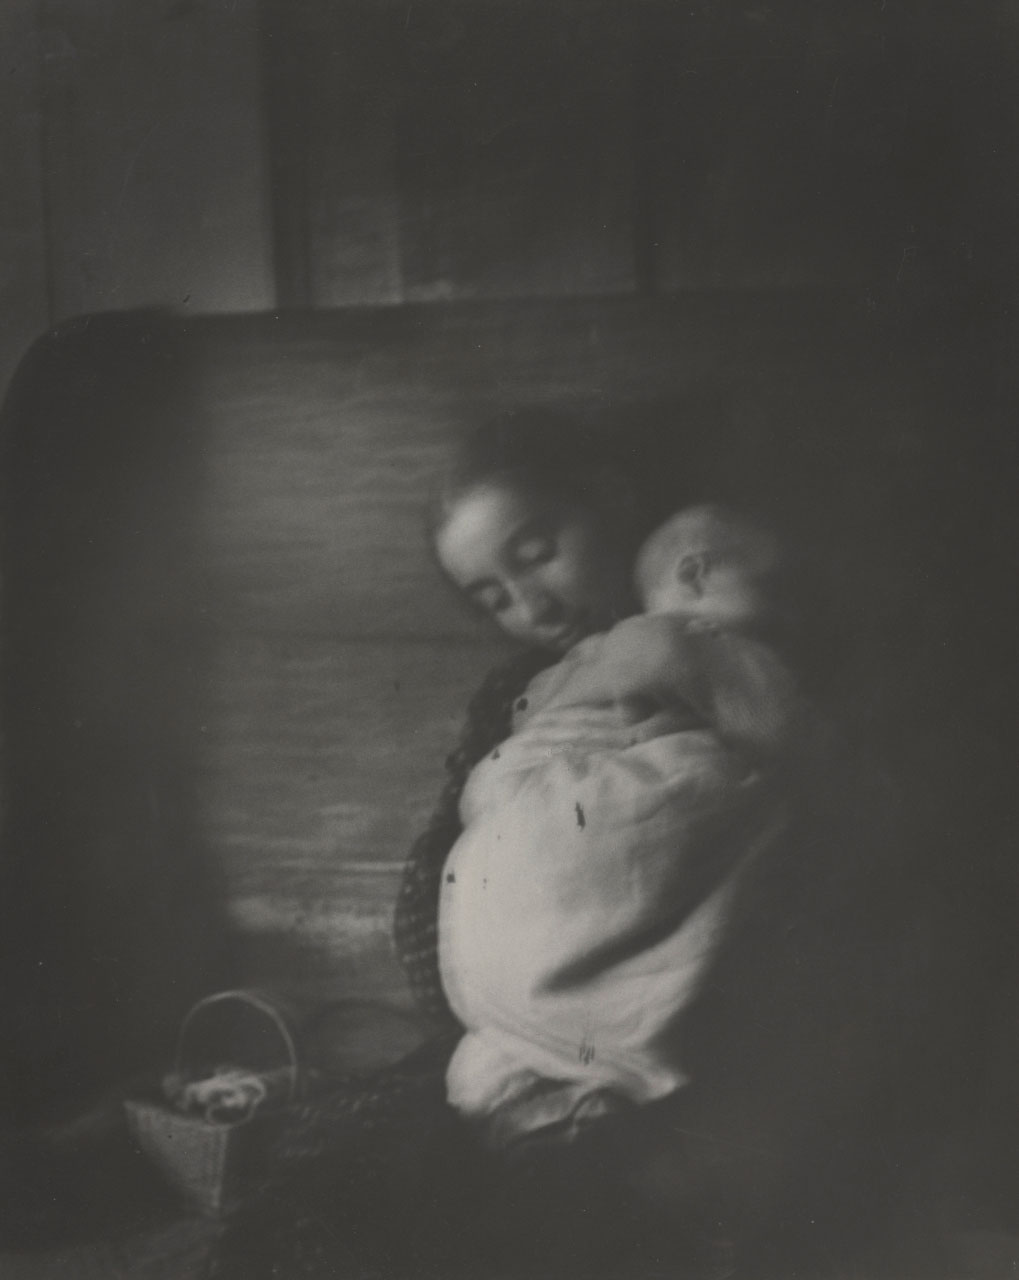 Nell Dorr: Mother & Child, featuring Tasha Tudor